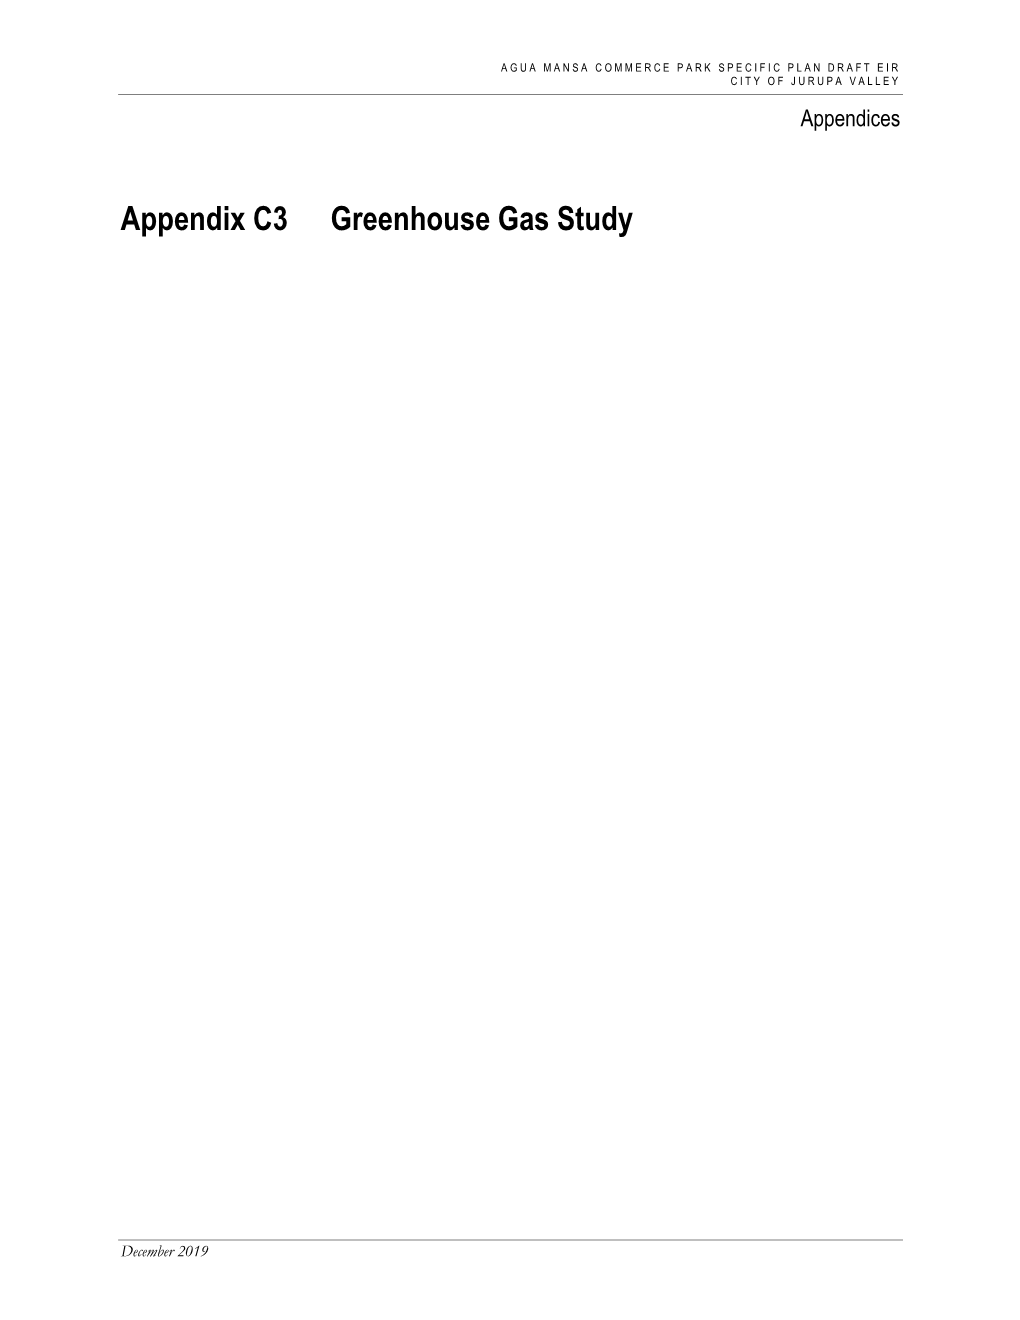 Appendix C3 Greenhouse Gas Study